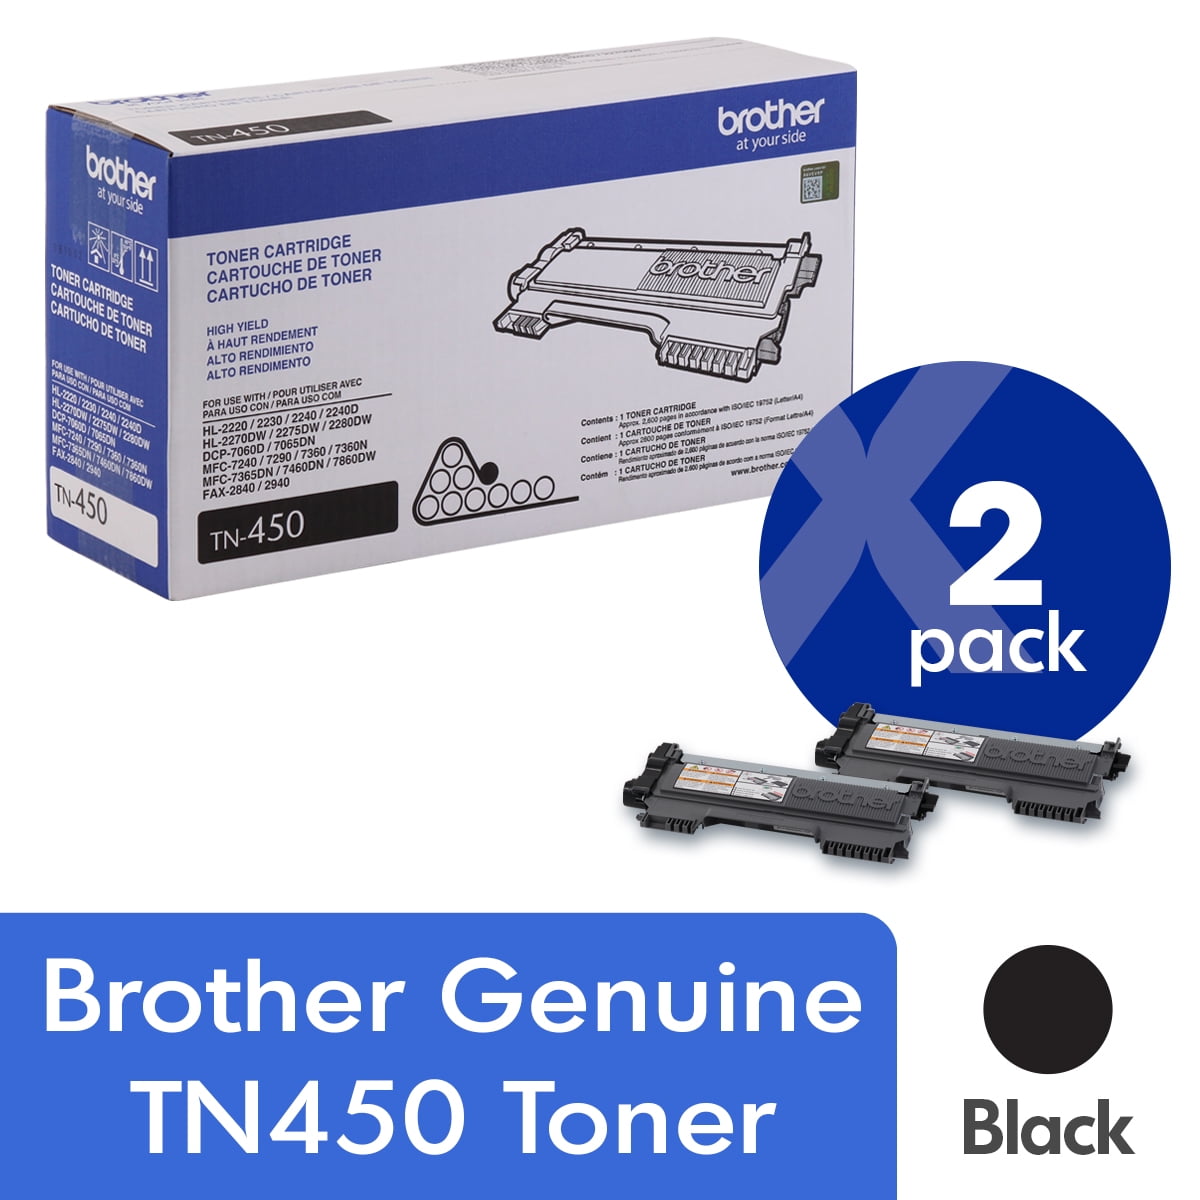 Brother Genuine Standard Yield Toner Cartridge, TN221C 